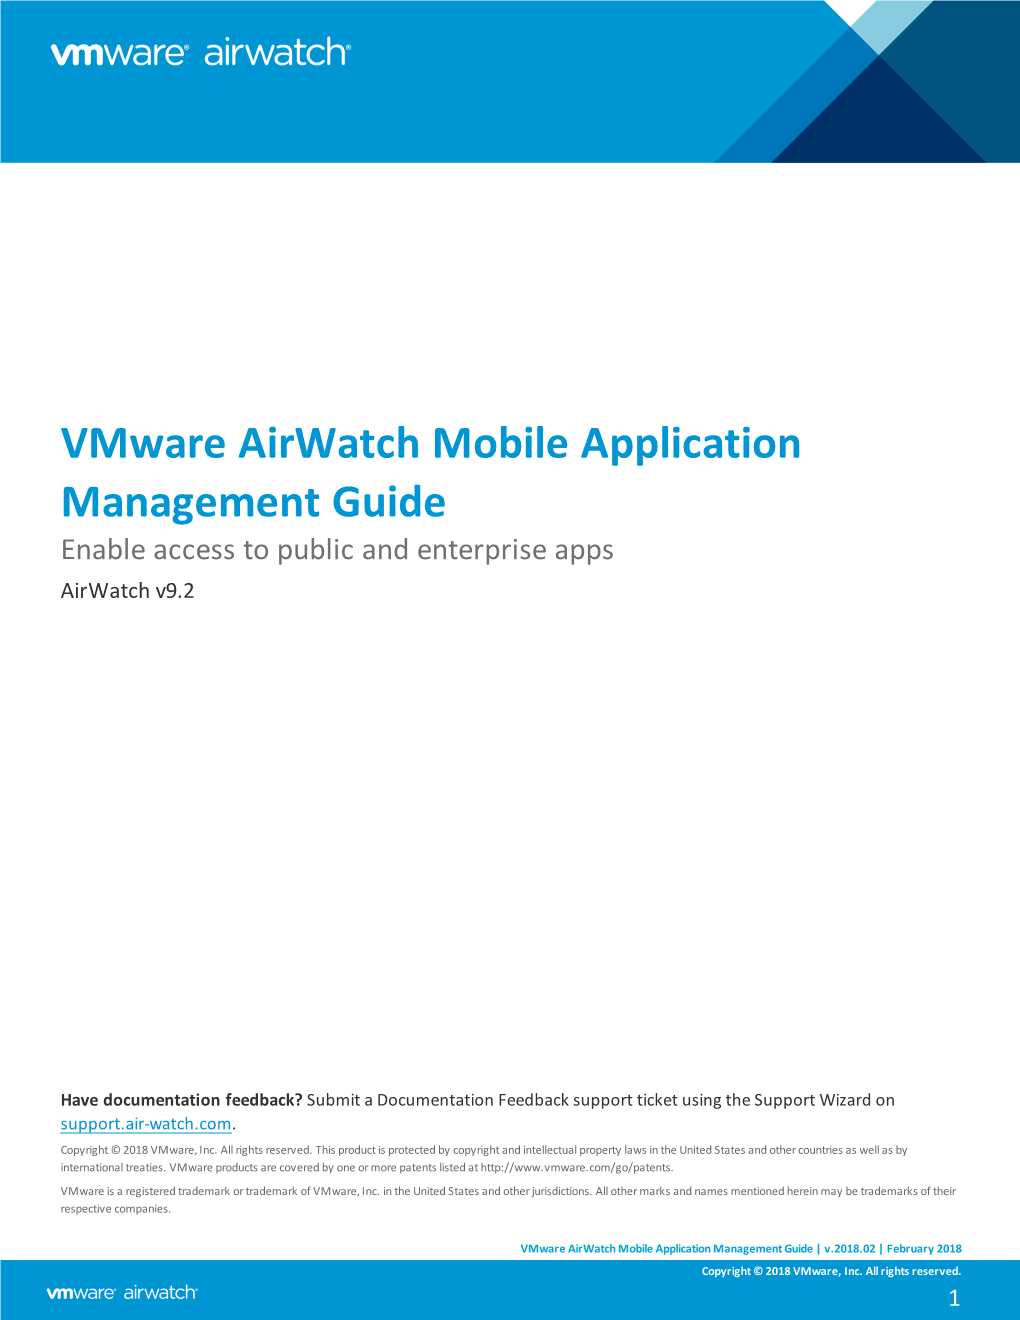 Vmware Airwatch Mobile Application Management (MAM) Guide